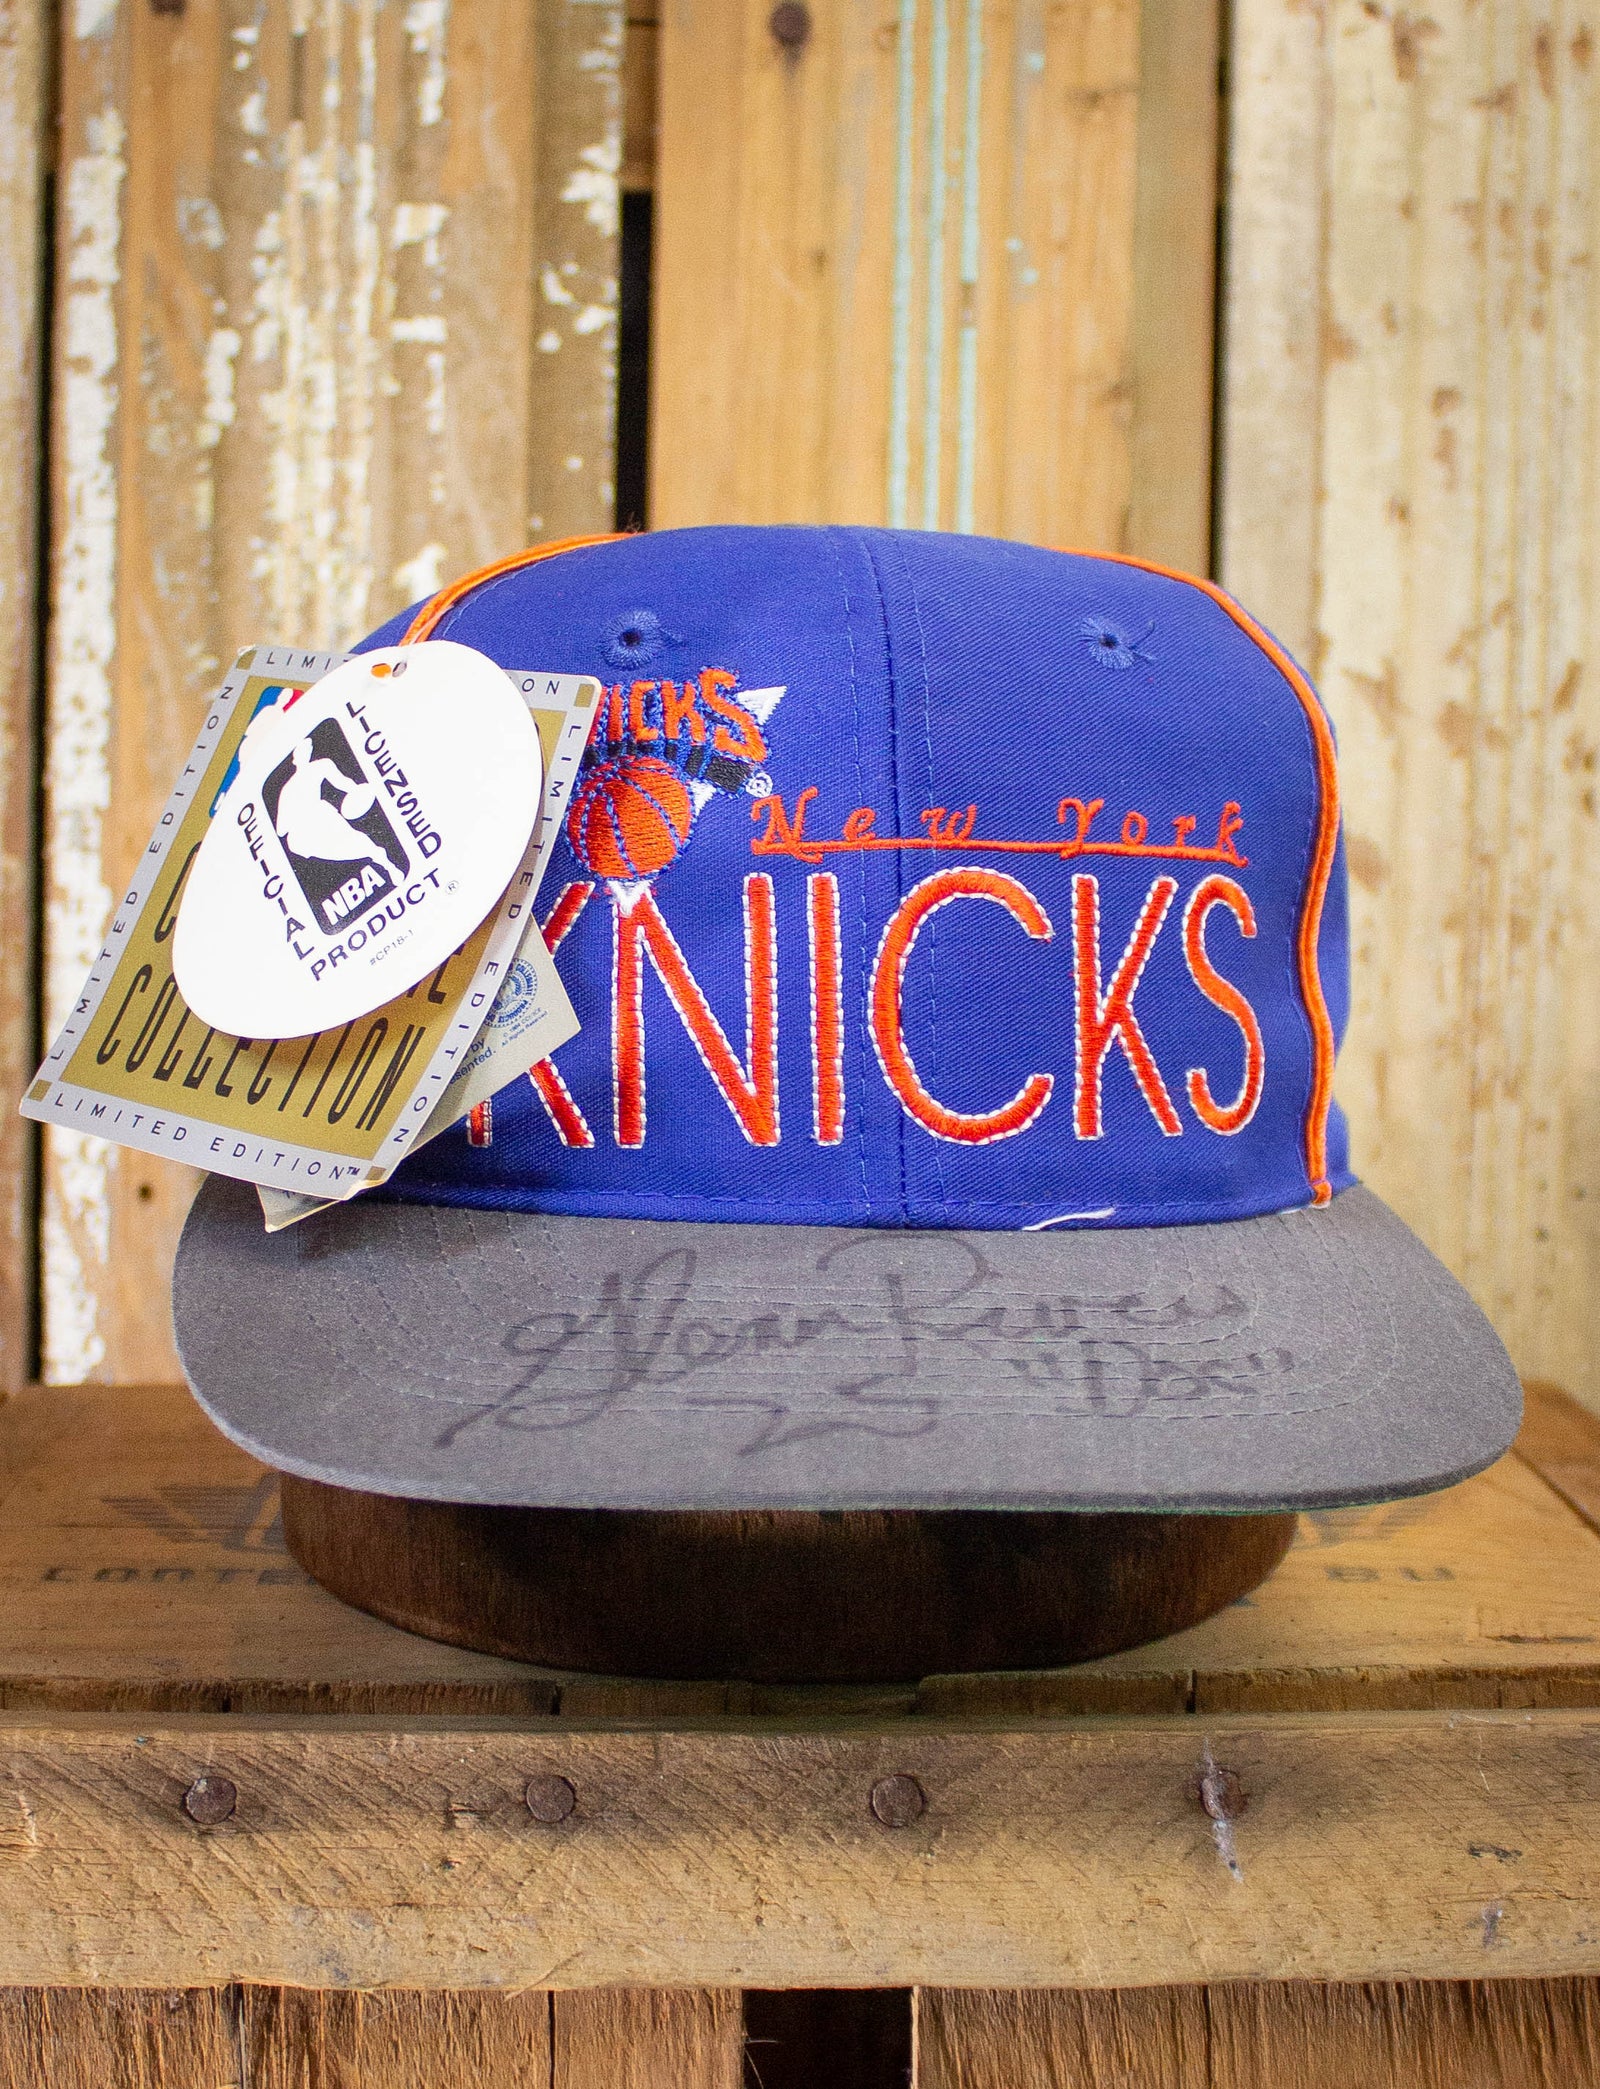 NBA Retro: New York Knicks